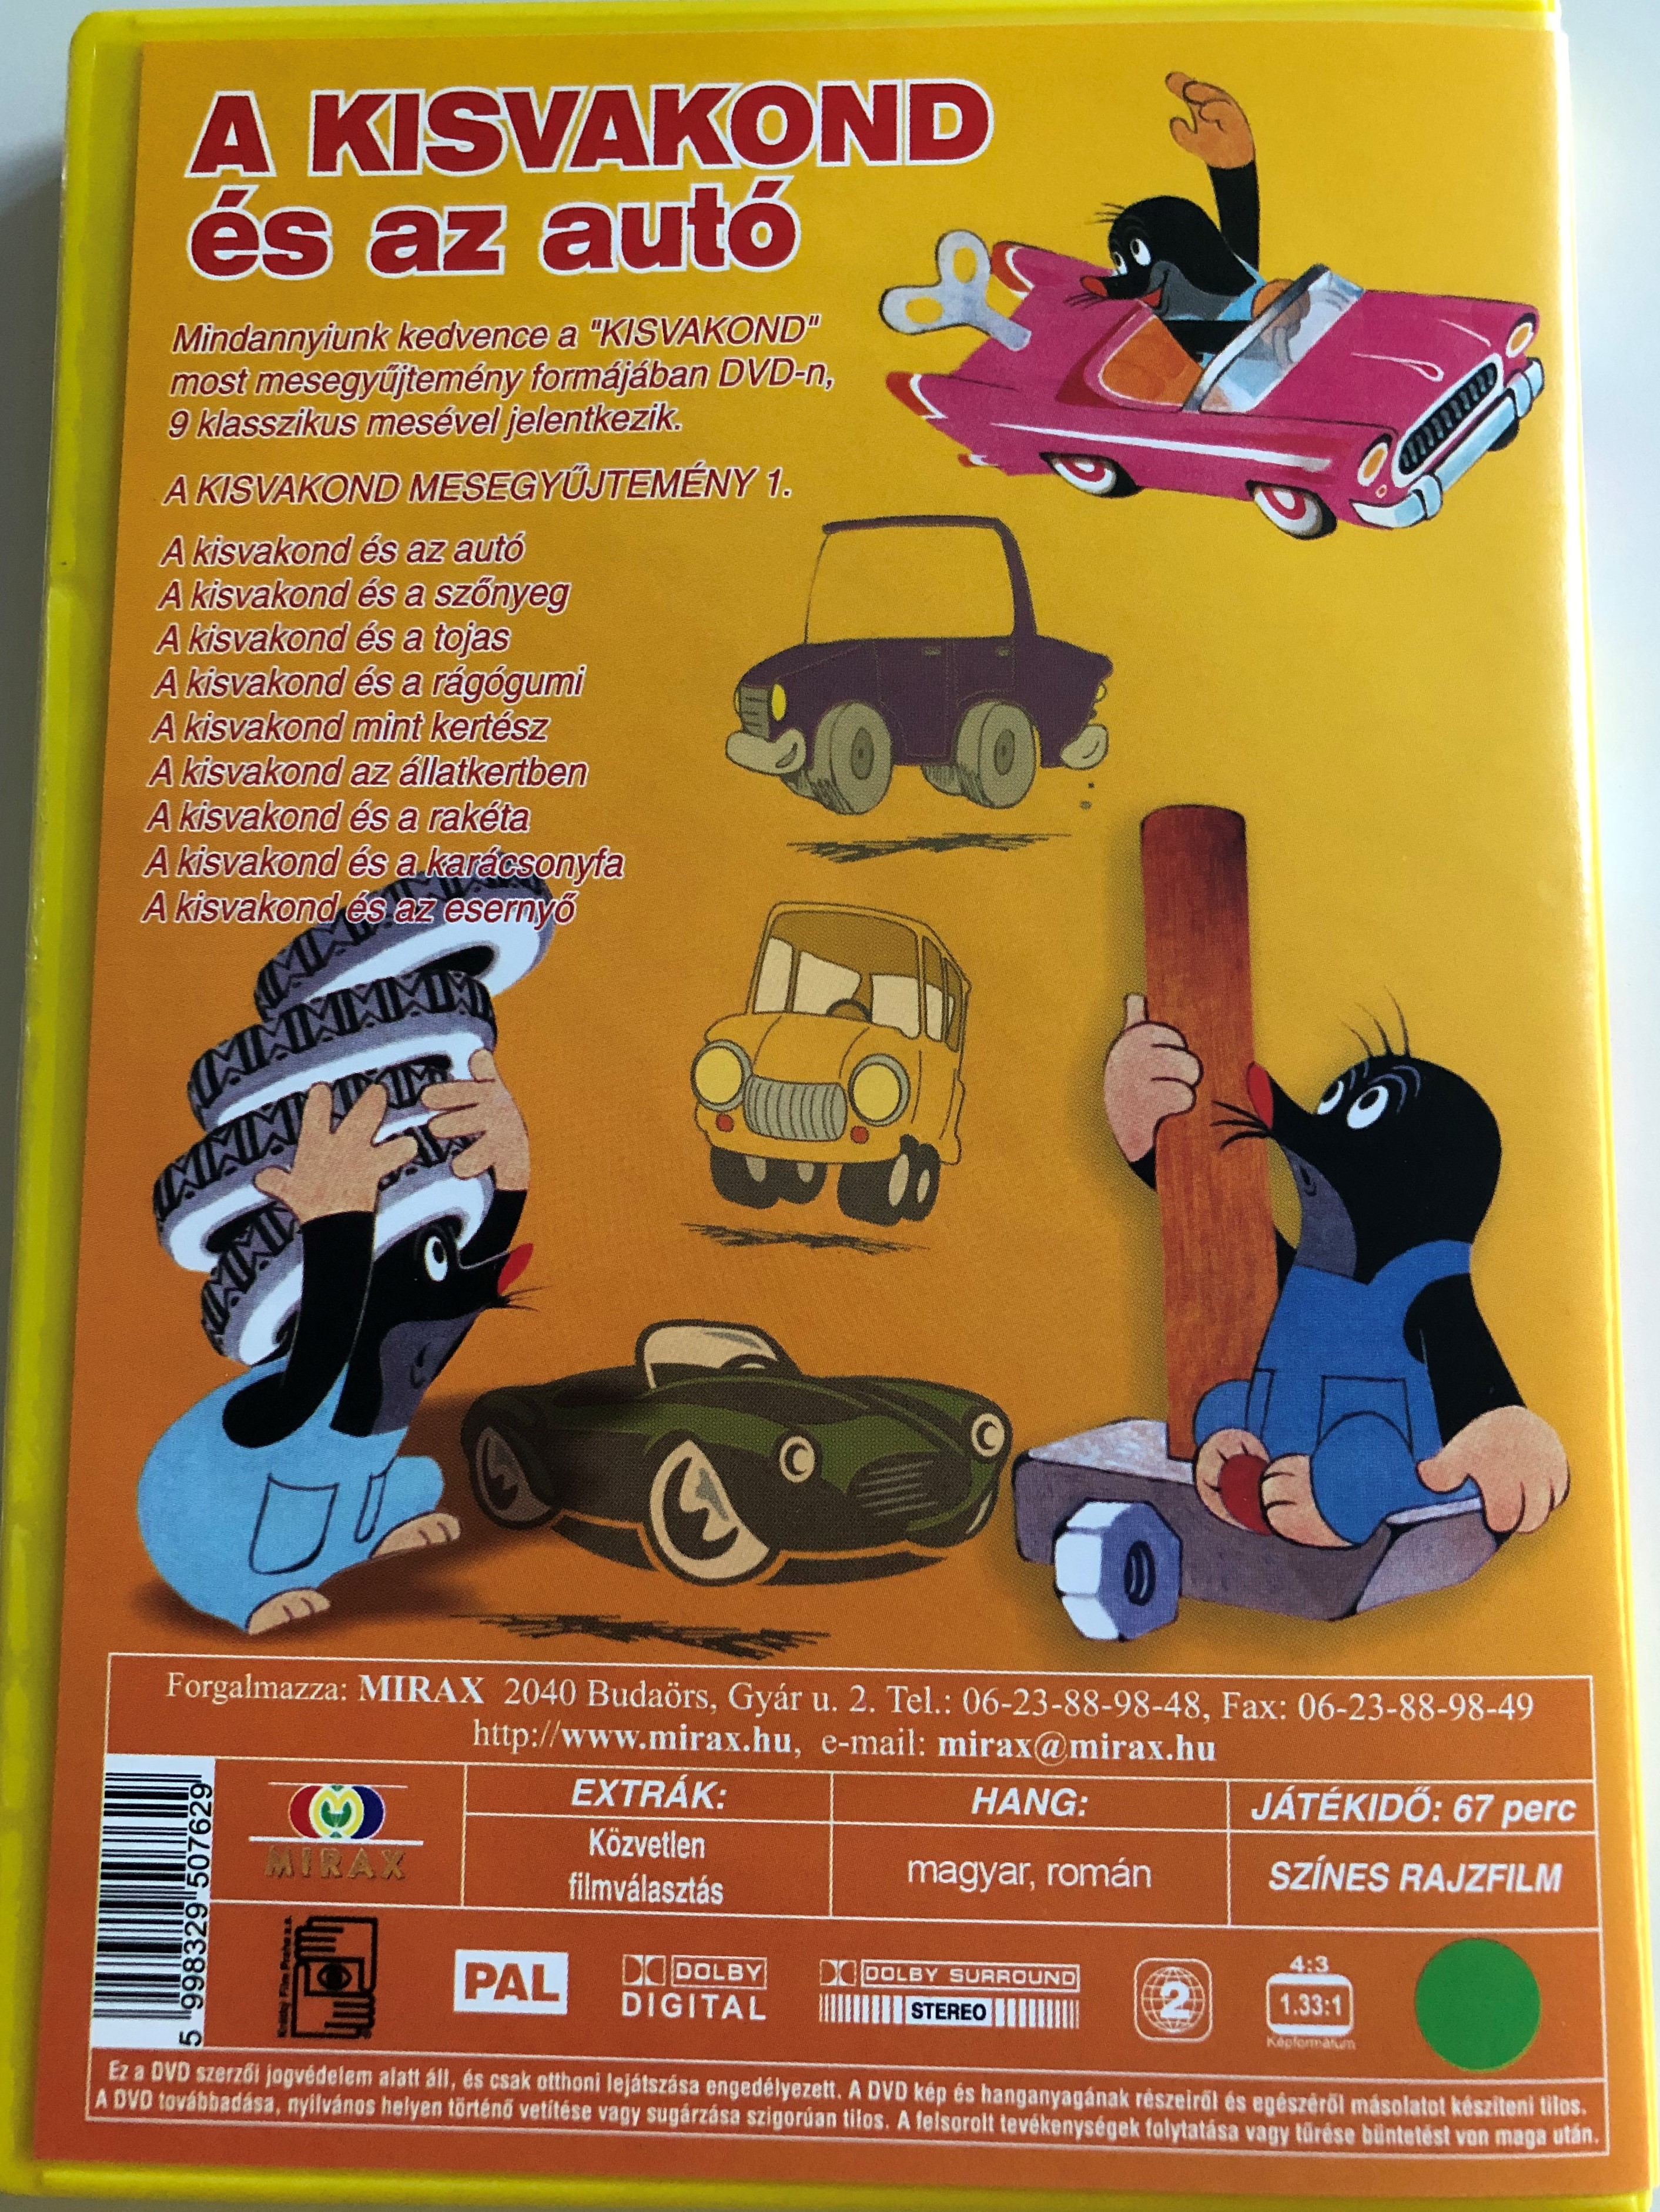 krtek-little-mole-and-the-car-series-1.-dvd-2000-kisvakond-s-az-aut-kisvakond-mesegy-jtem-ny-1.-9-episodes-on-disc-classic-czech-cartoon-created-by-zden-k-miler-3-.jpg